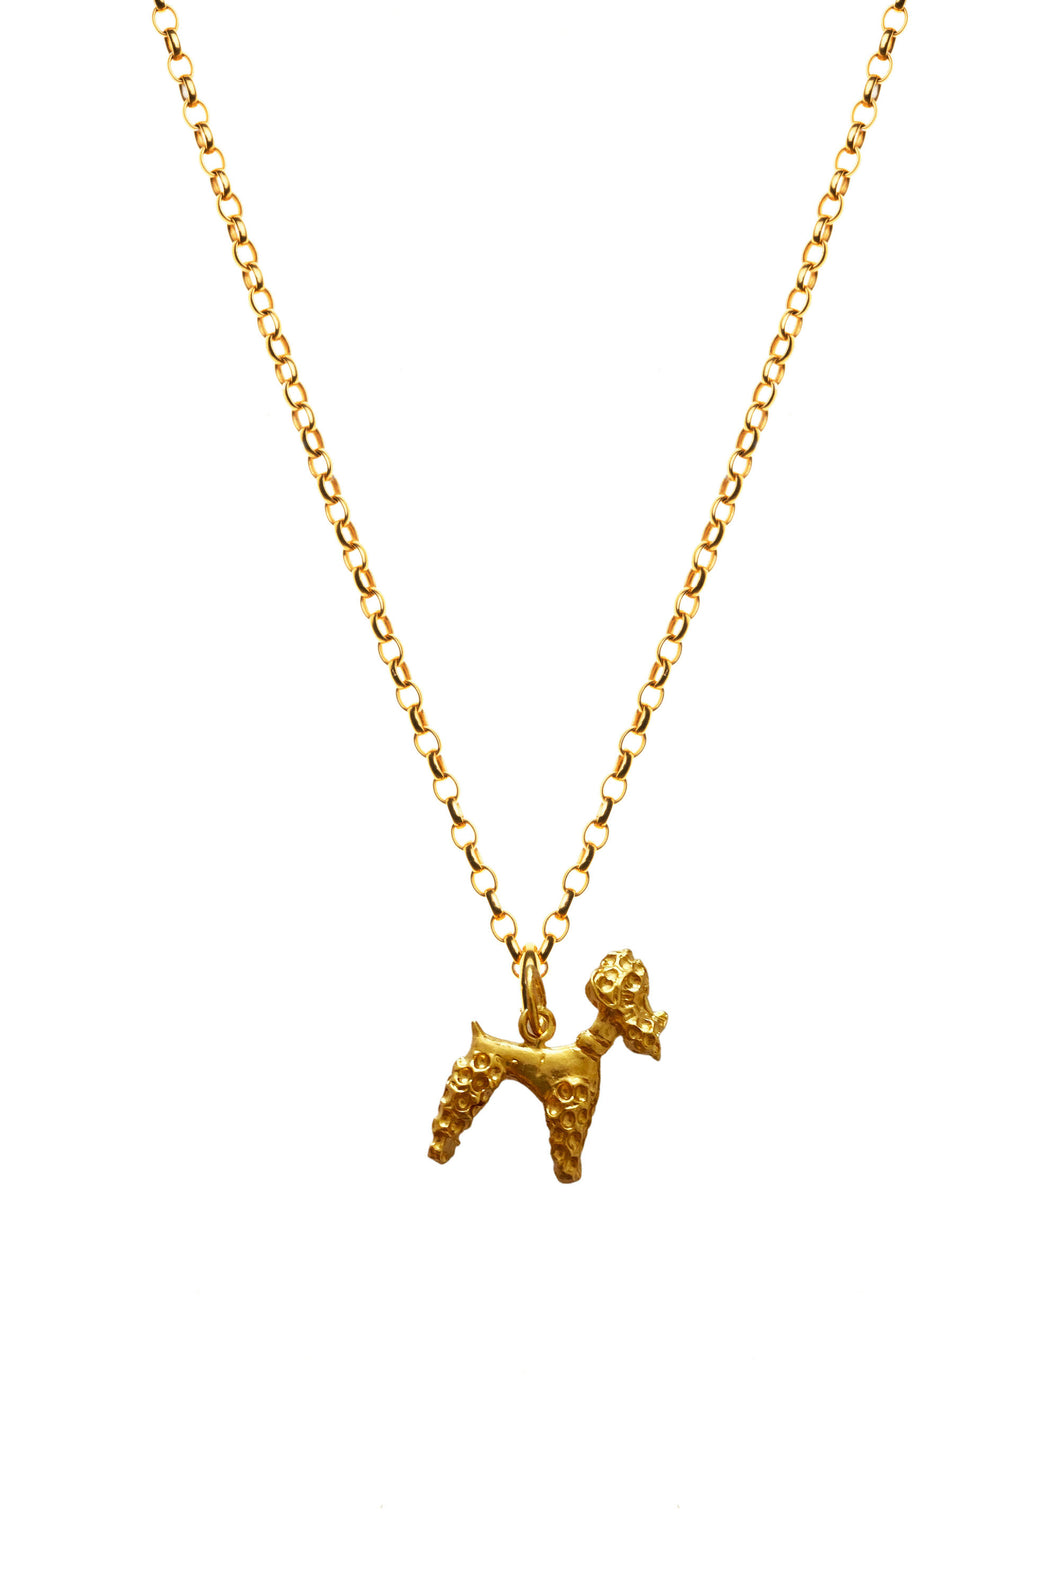 Gold Poodle Dog Charm Necklace